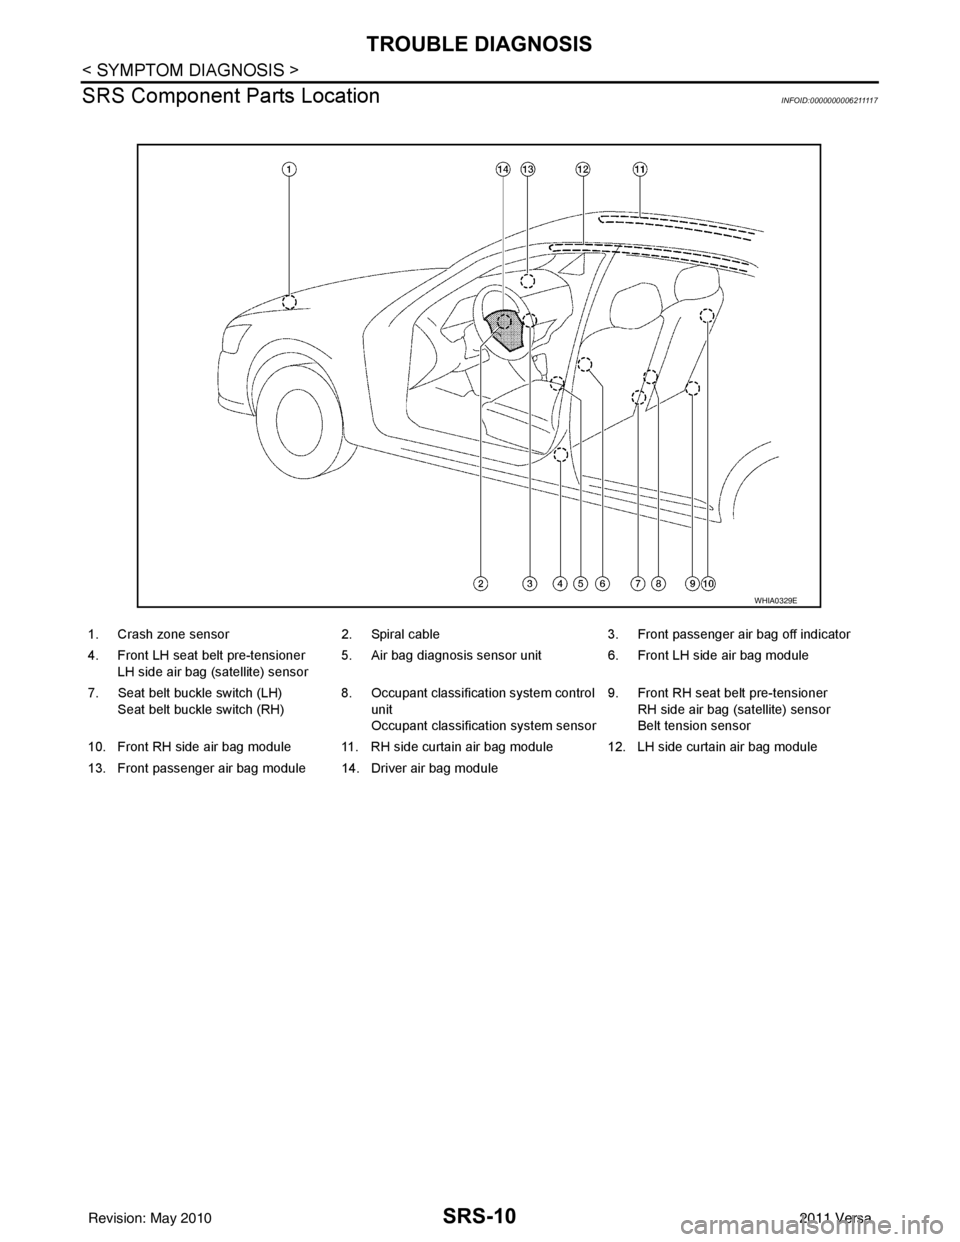 NISSAN LATIO 2011  Service Repair Manual SRS-10
< SYMPTOM DIAGNOSIS >
TROUBLE DIAGNOSIS
SRS Component Parts Location
INFOID:0000000006211117
1. Crash zone sensor 2. Spiral cable 3. Front passenger air bag off indicator
4. Front LH seat belt 